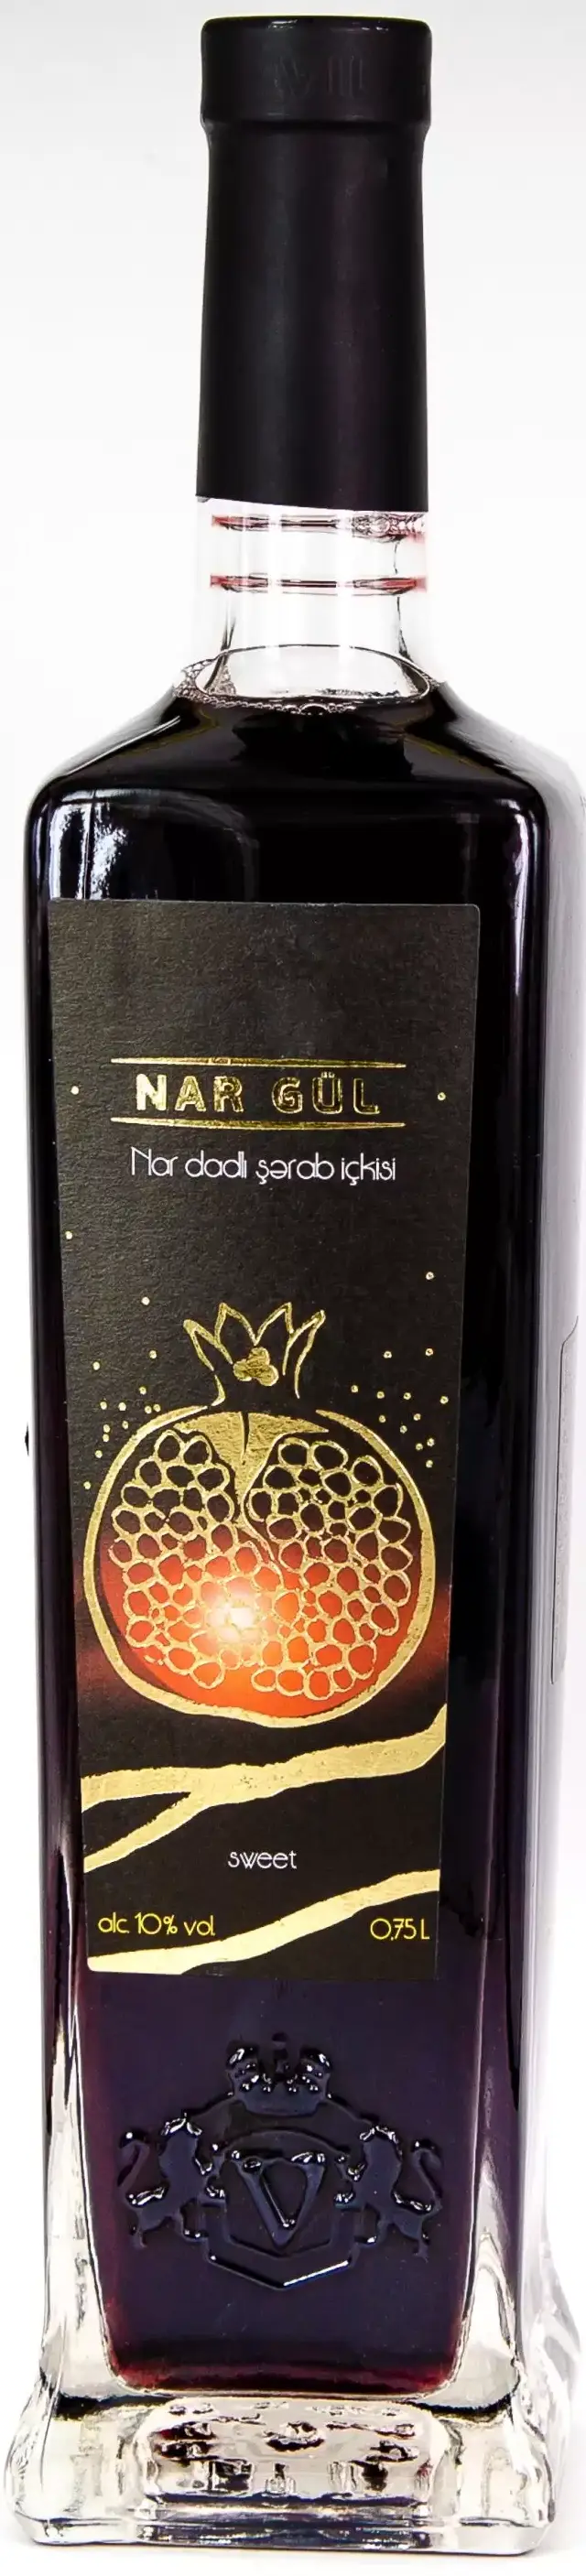 Nar gul Гранатовый цветок (Nar gul Pomegranate flower)